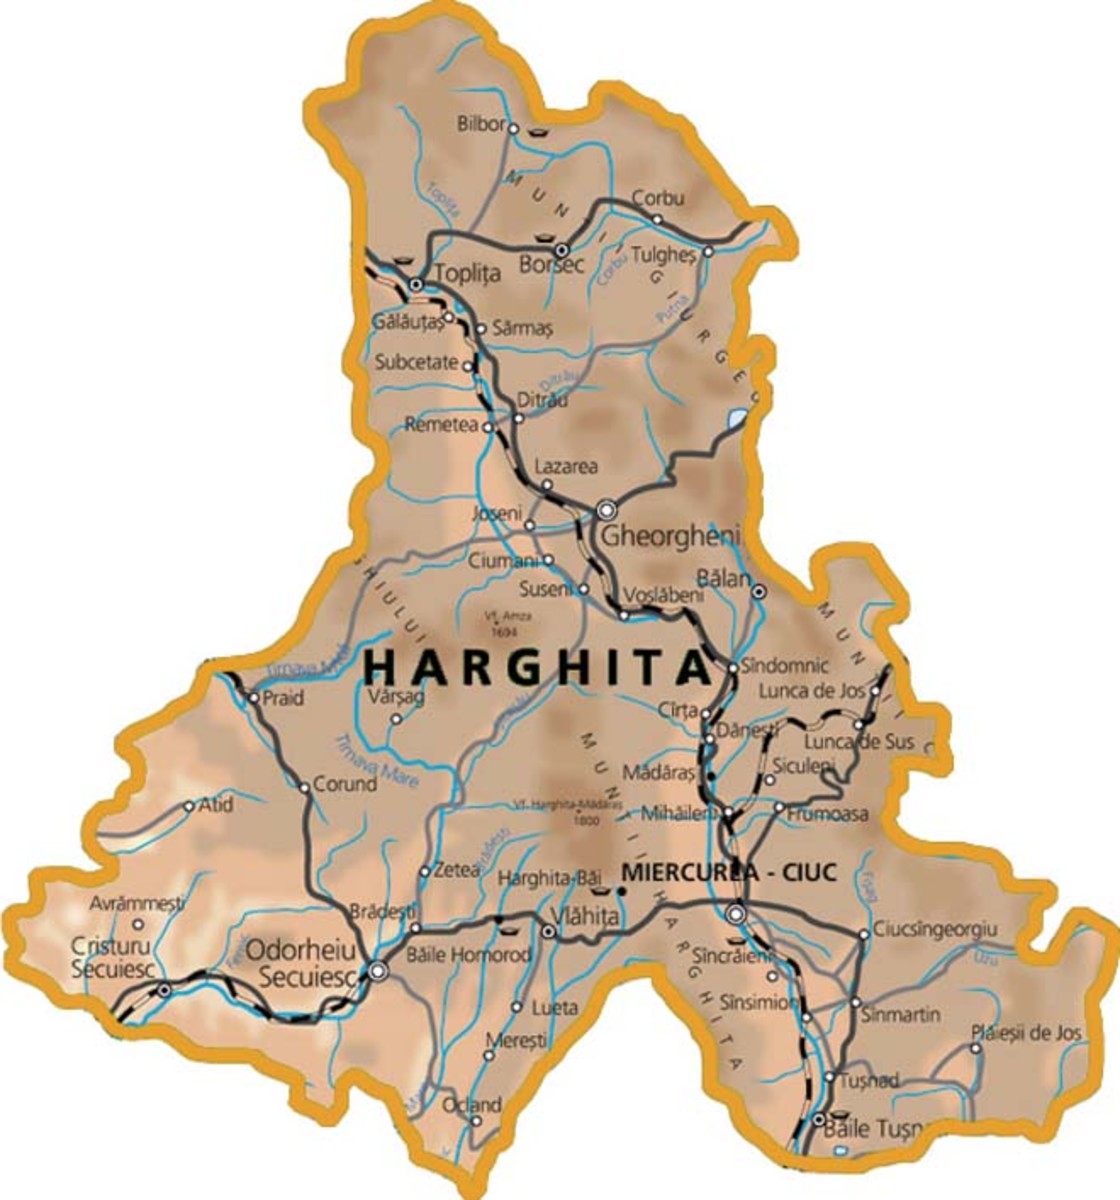 bear-nation-looking-for-bear-in-harghita-county--transylvania---part-1